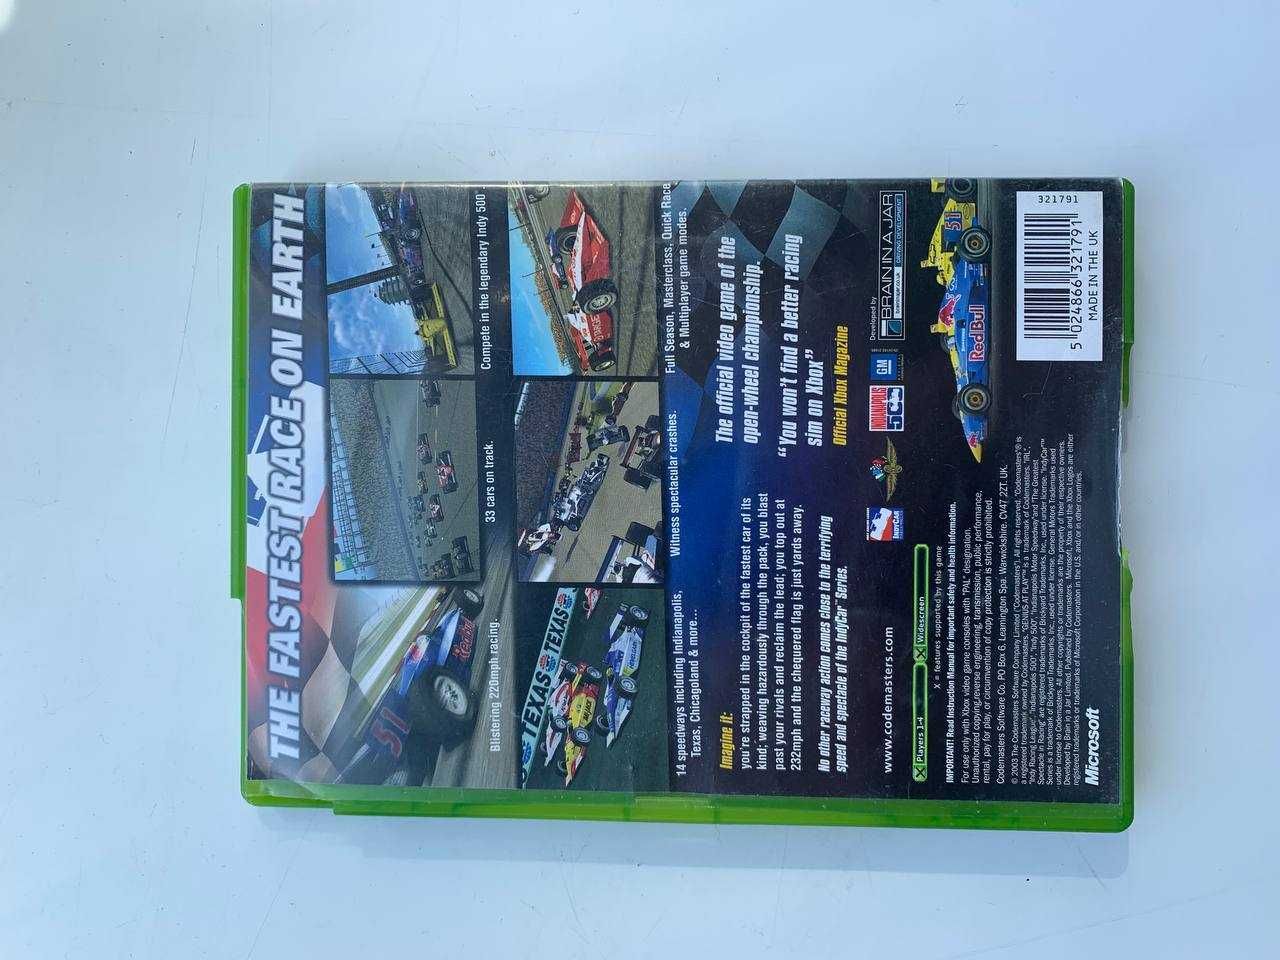 IndyCar series для Xbox Original